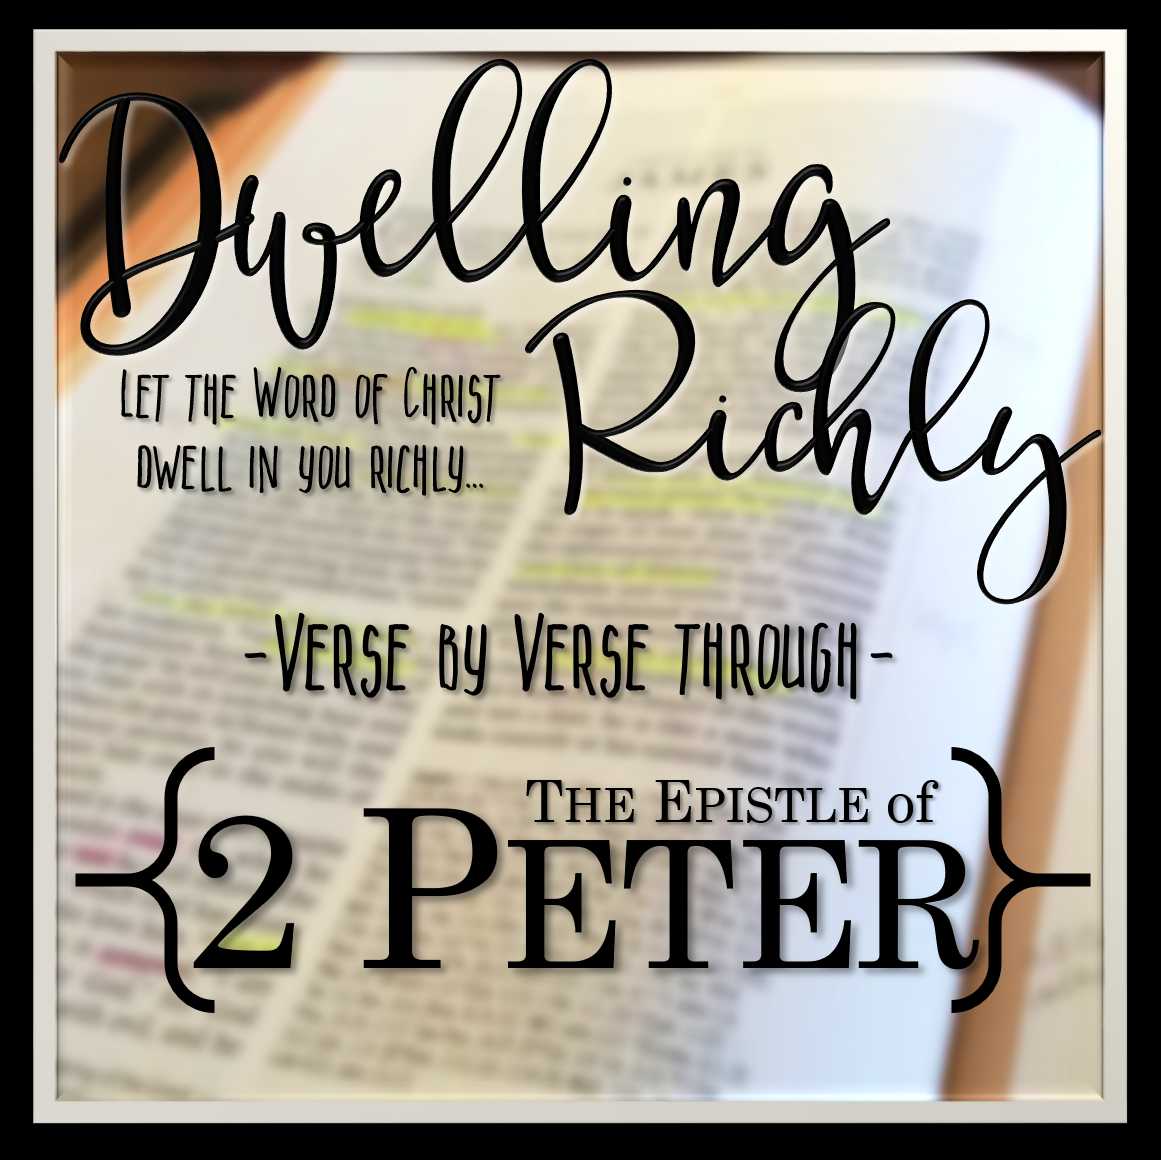 2 Peter 2:1-22